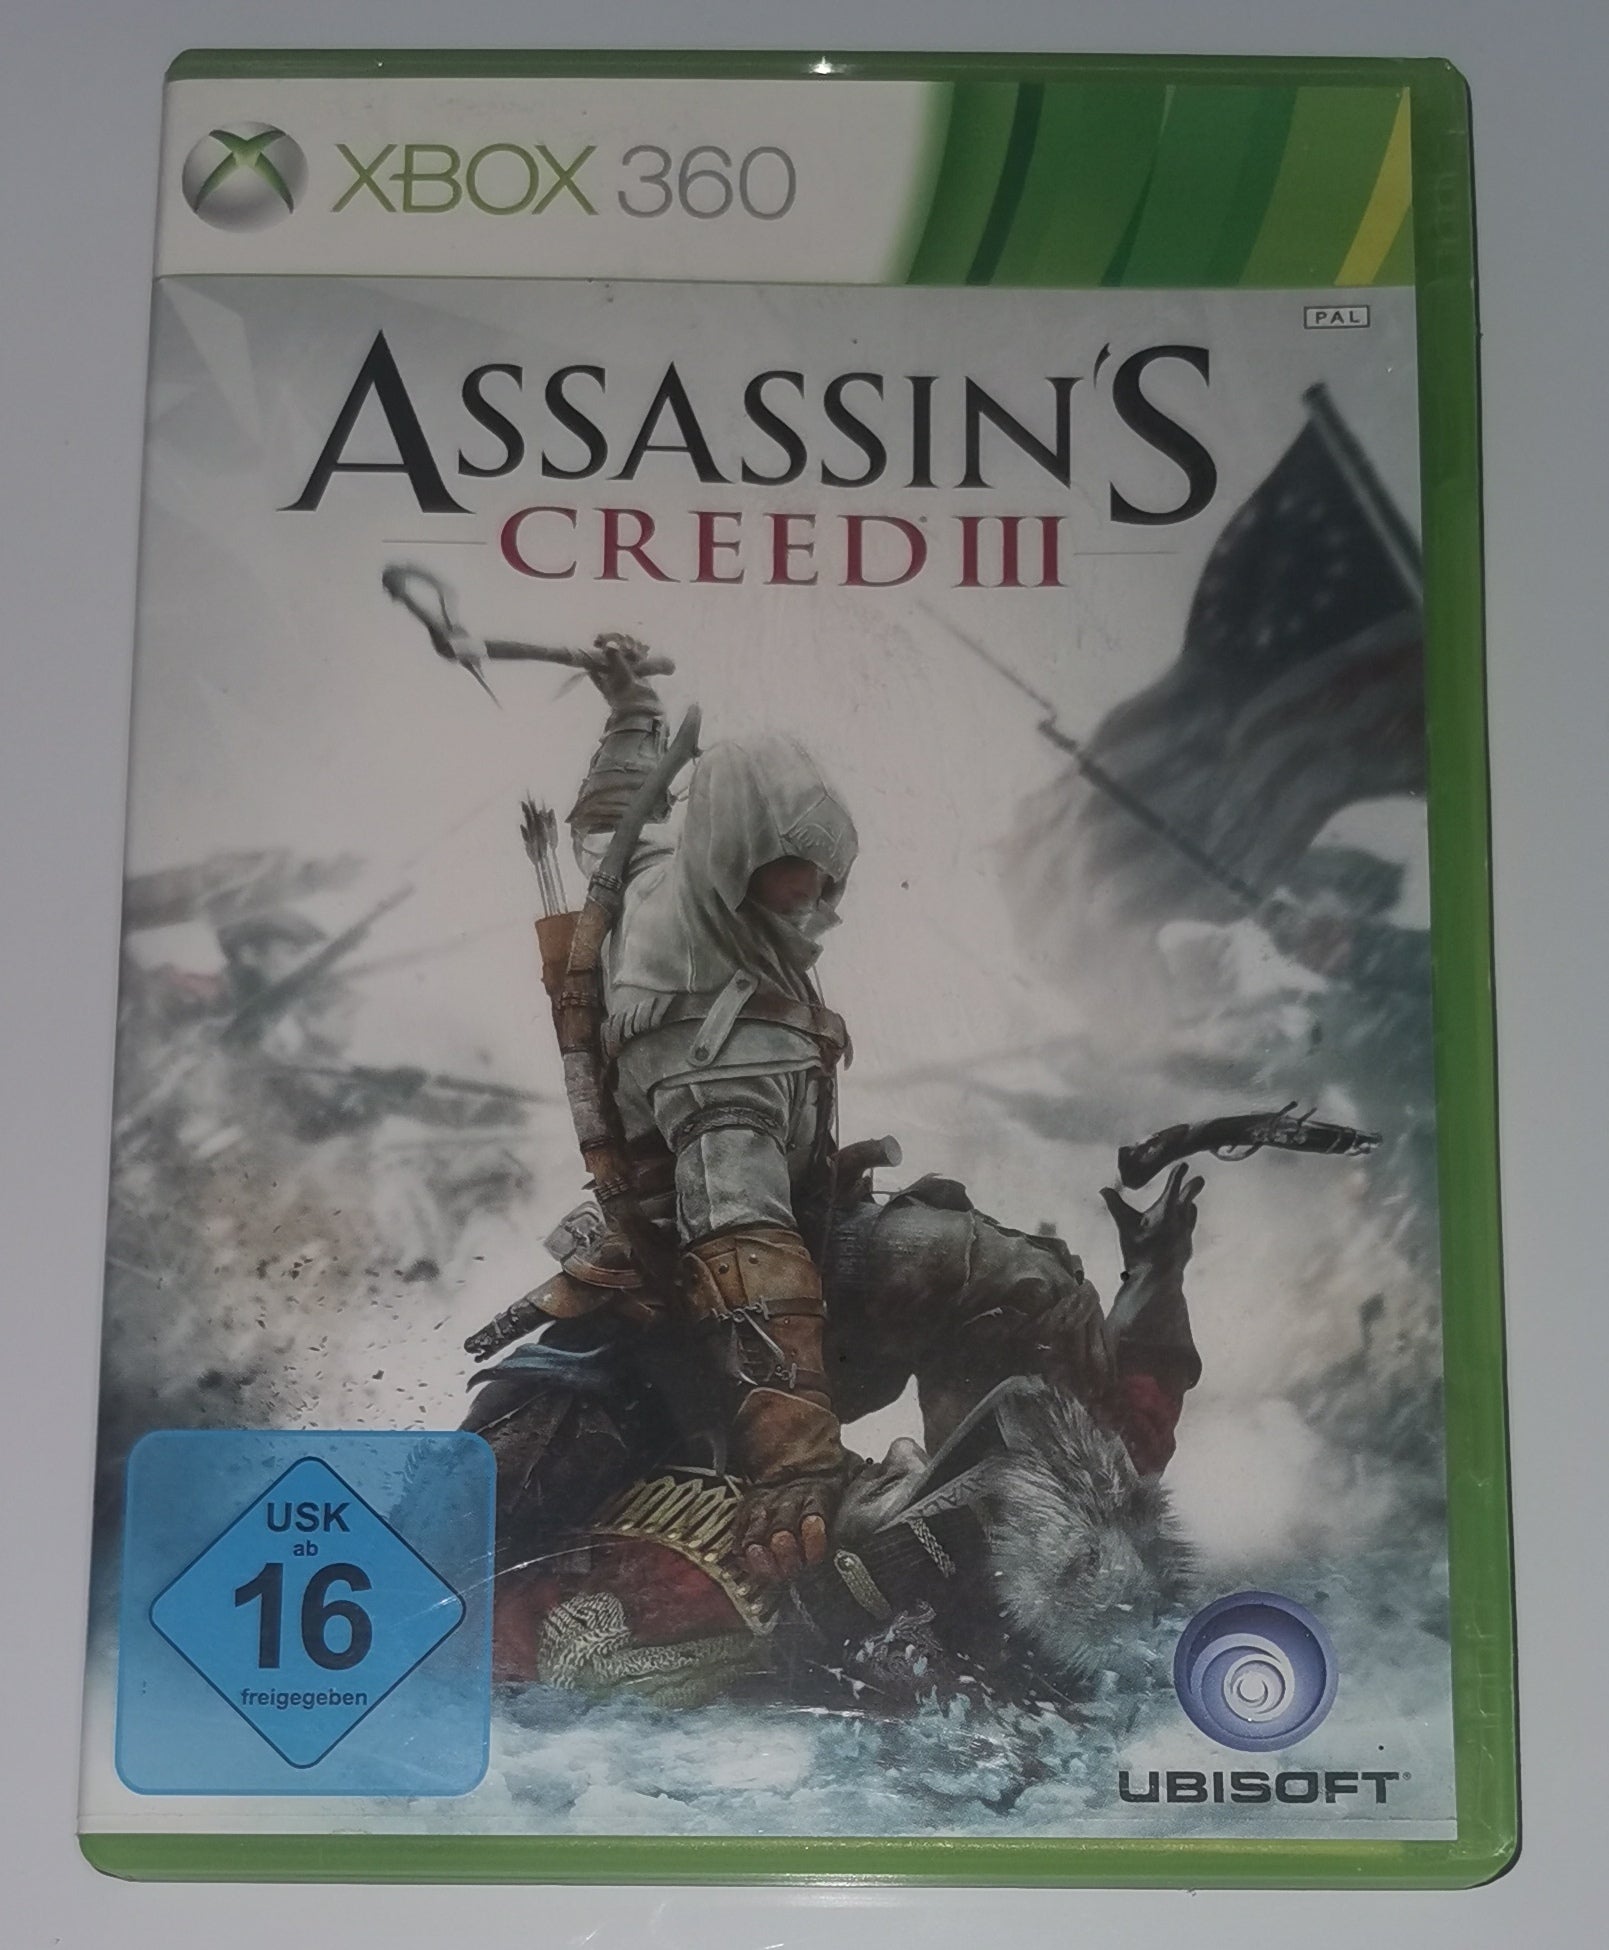 Assassins Creed 3 (100% uncut) [Xbox 360] [Gut]